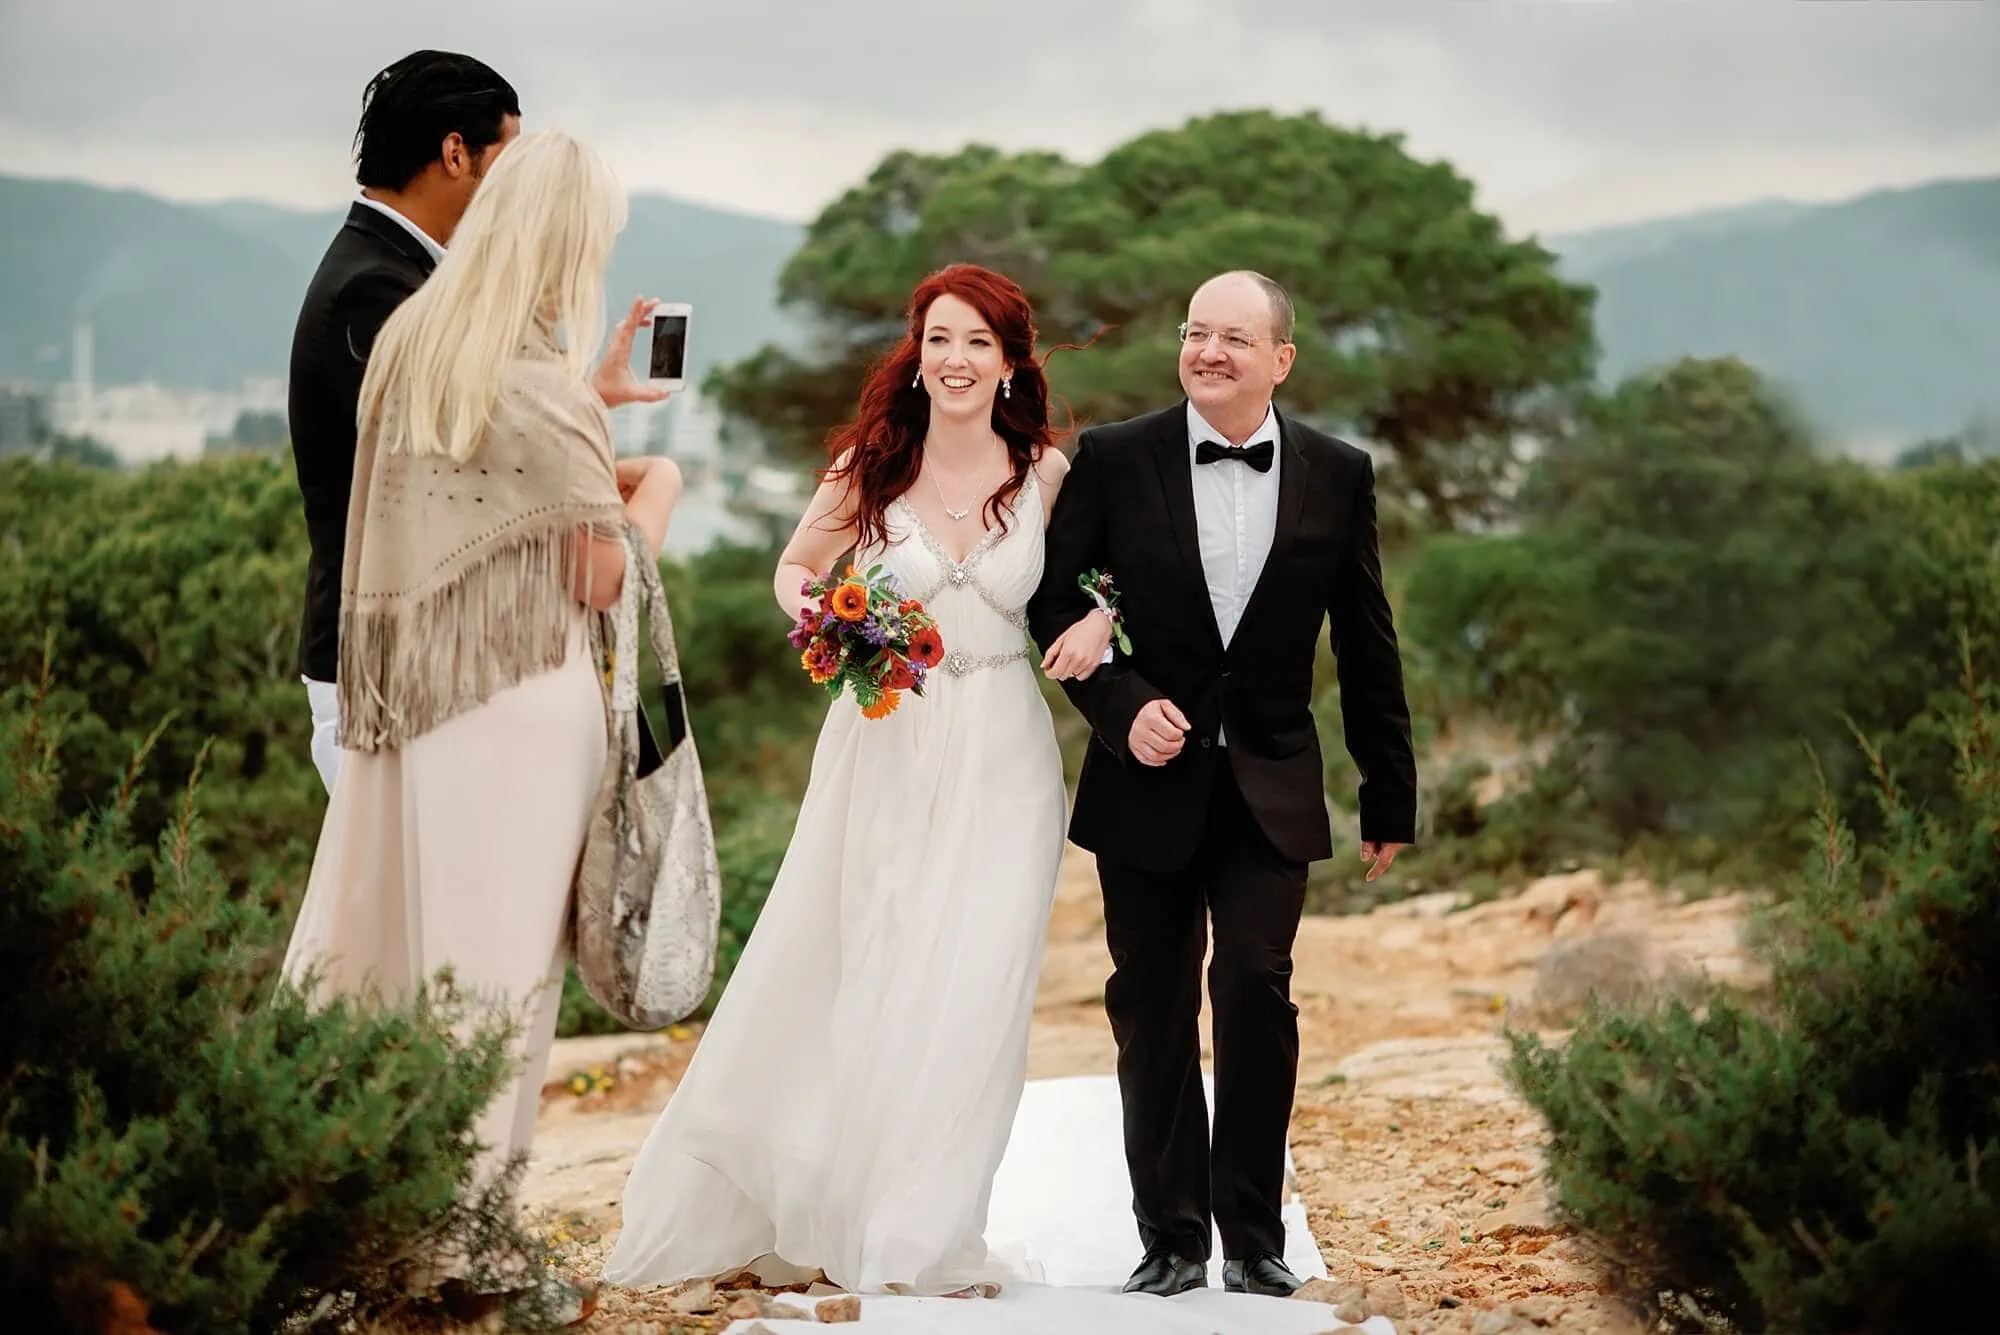 Arrival of the bride in Ibiza